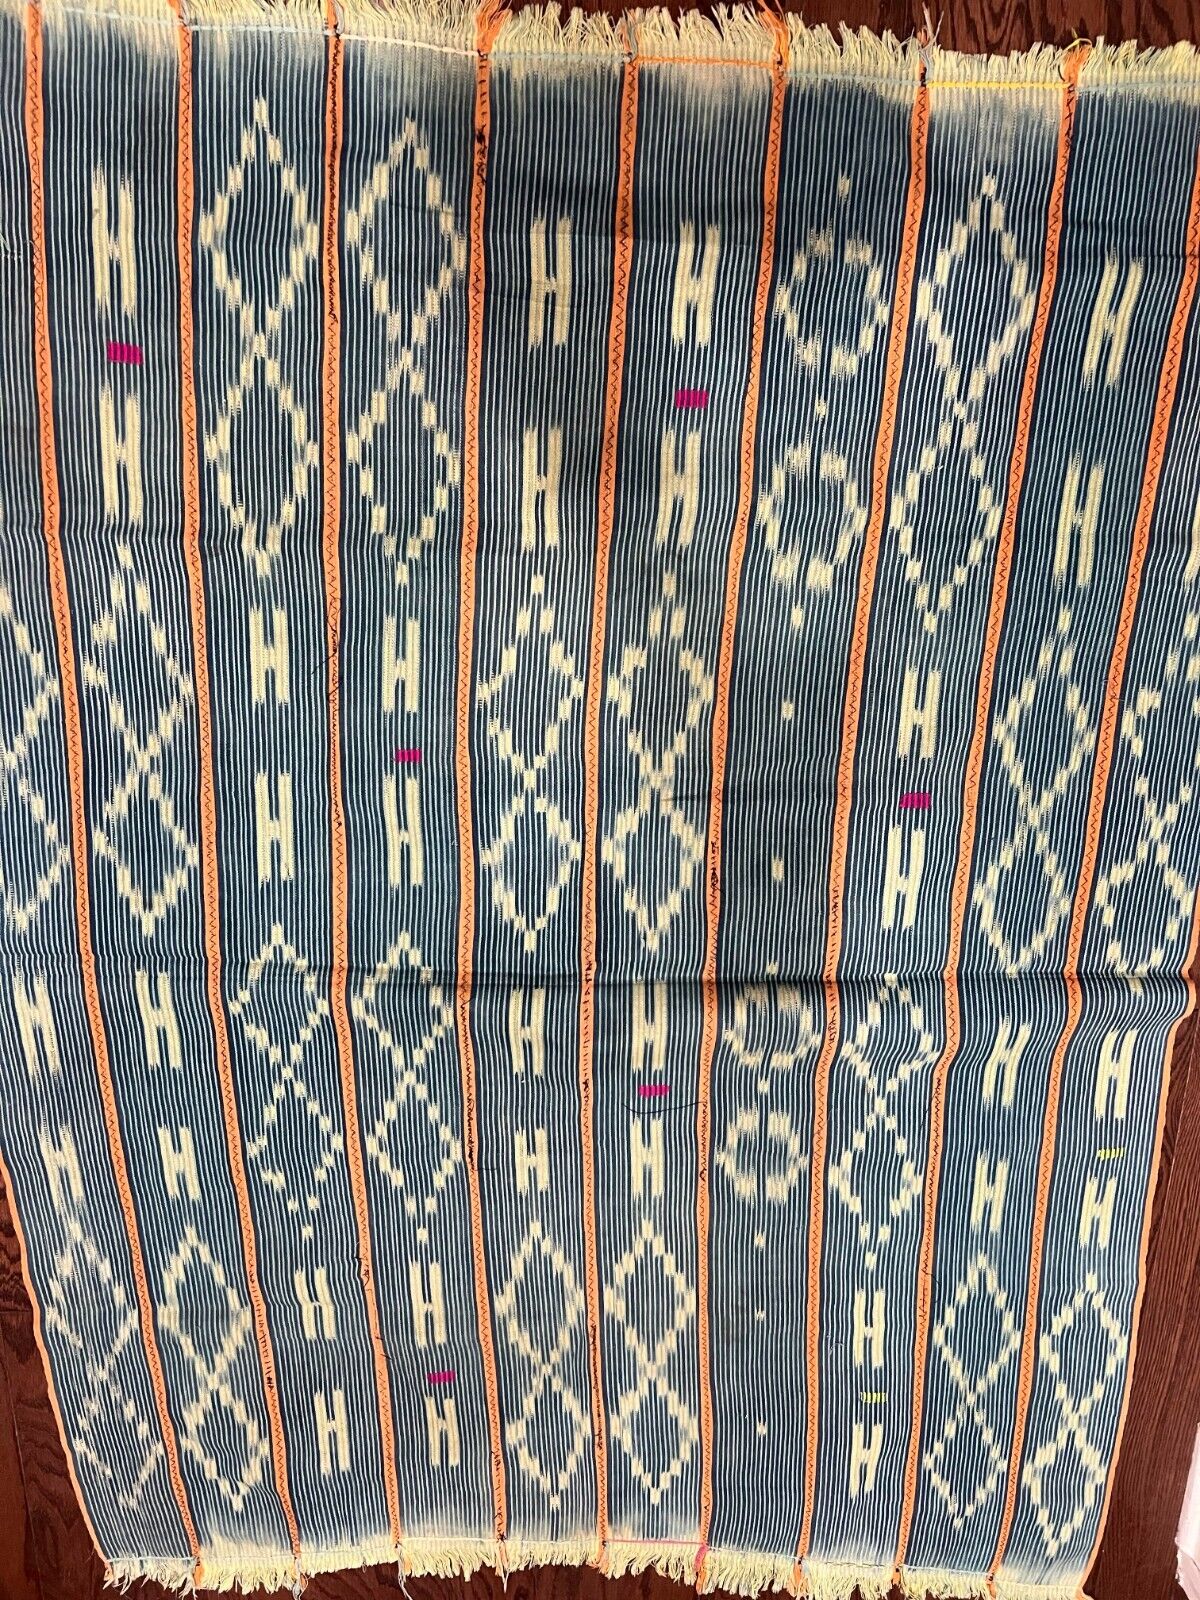 Hand woven Baule Stripwoven Textile Ivory Coast African Art 56\